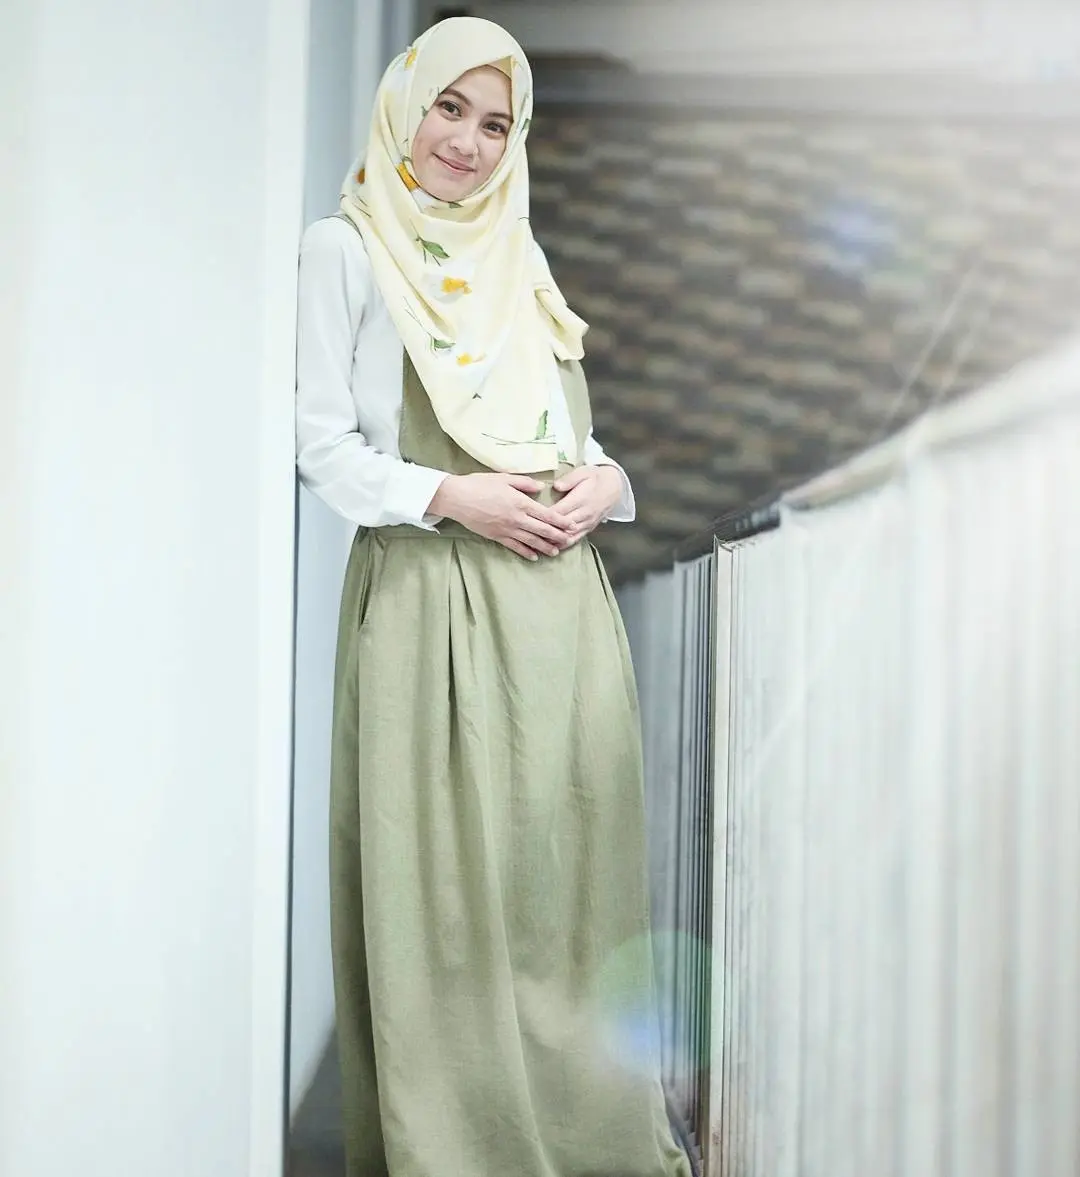 Gaya hijab yang simple dan casual ala selebriti cantik. (sumber foto: @ichasoebandono/instagram)